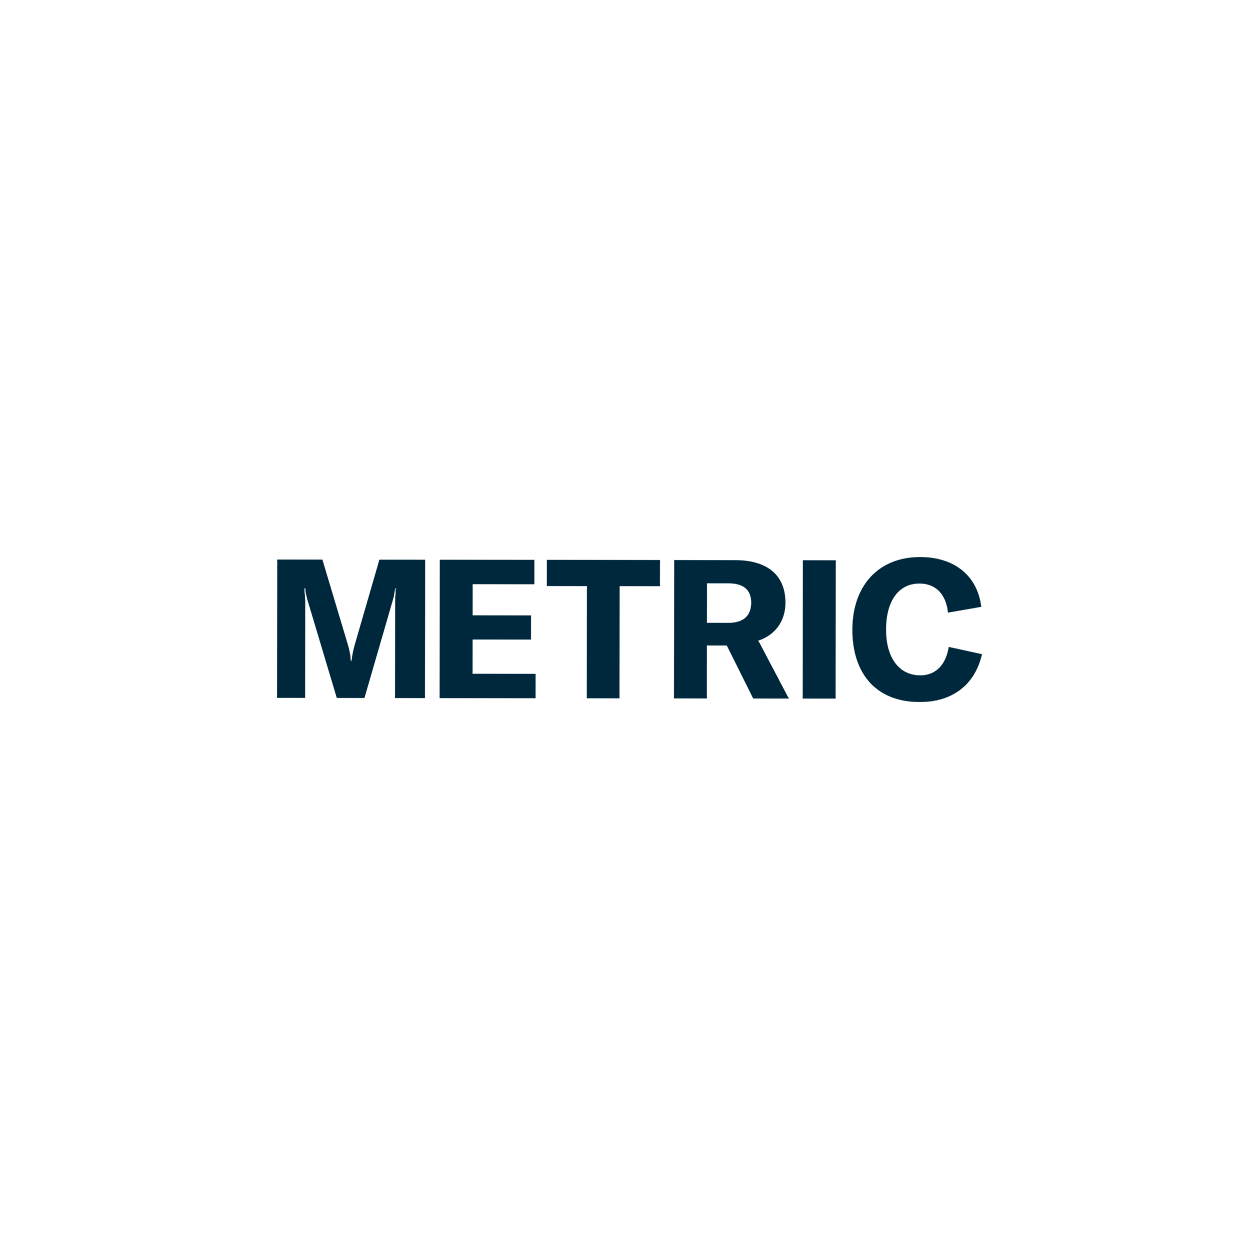 Metric brand logo image